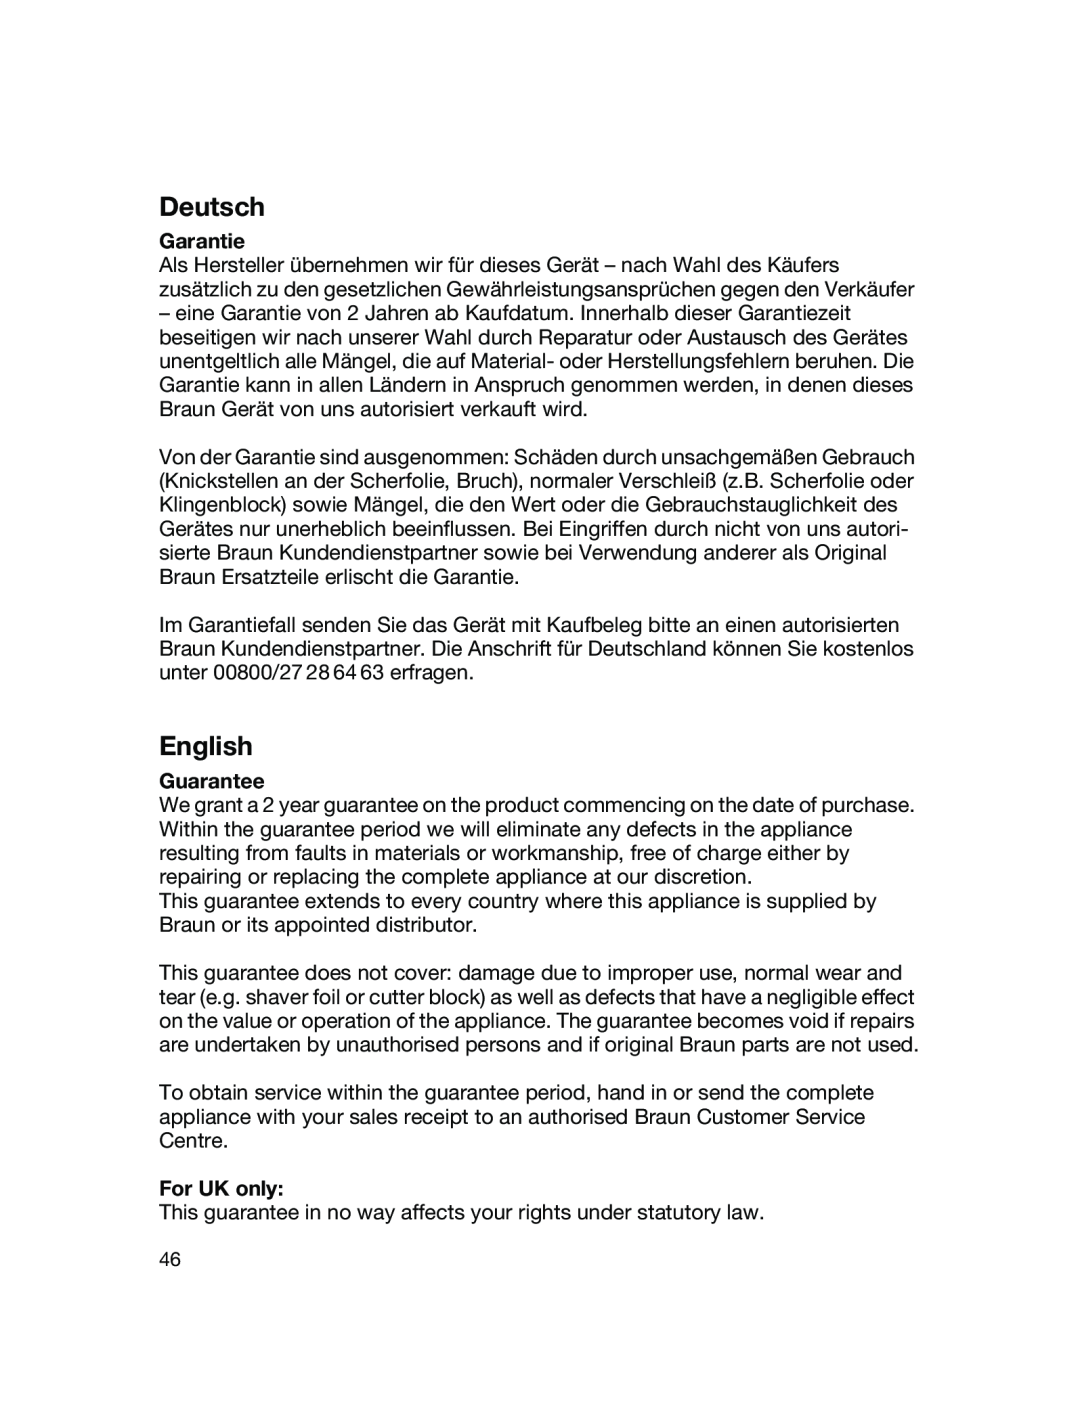 Braun 190 S manual Deutsch, English, Garantie, Guarantee, For UK only 